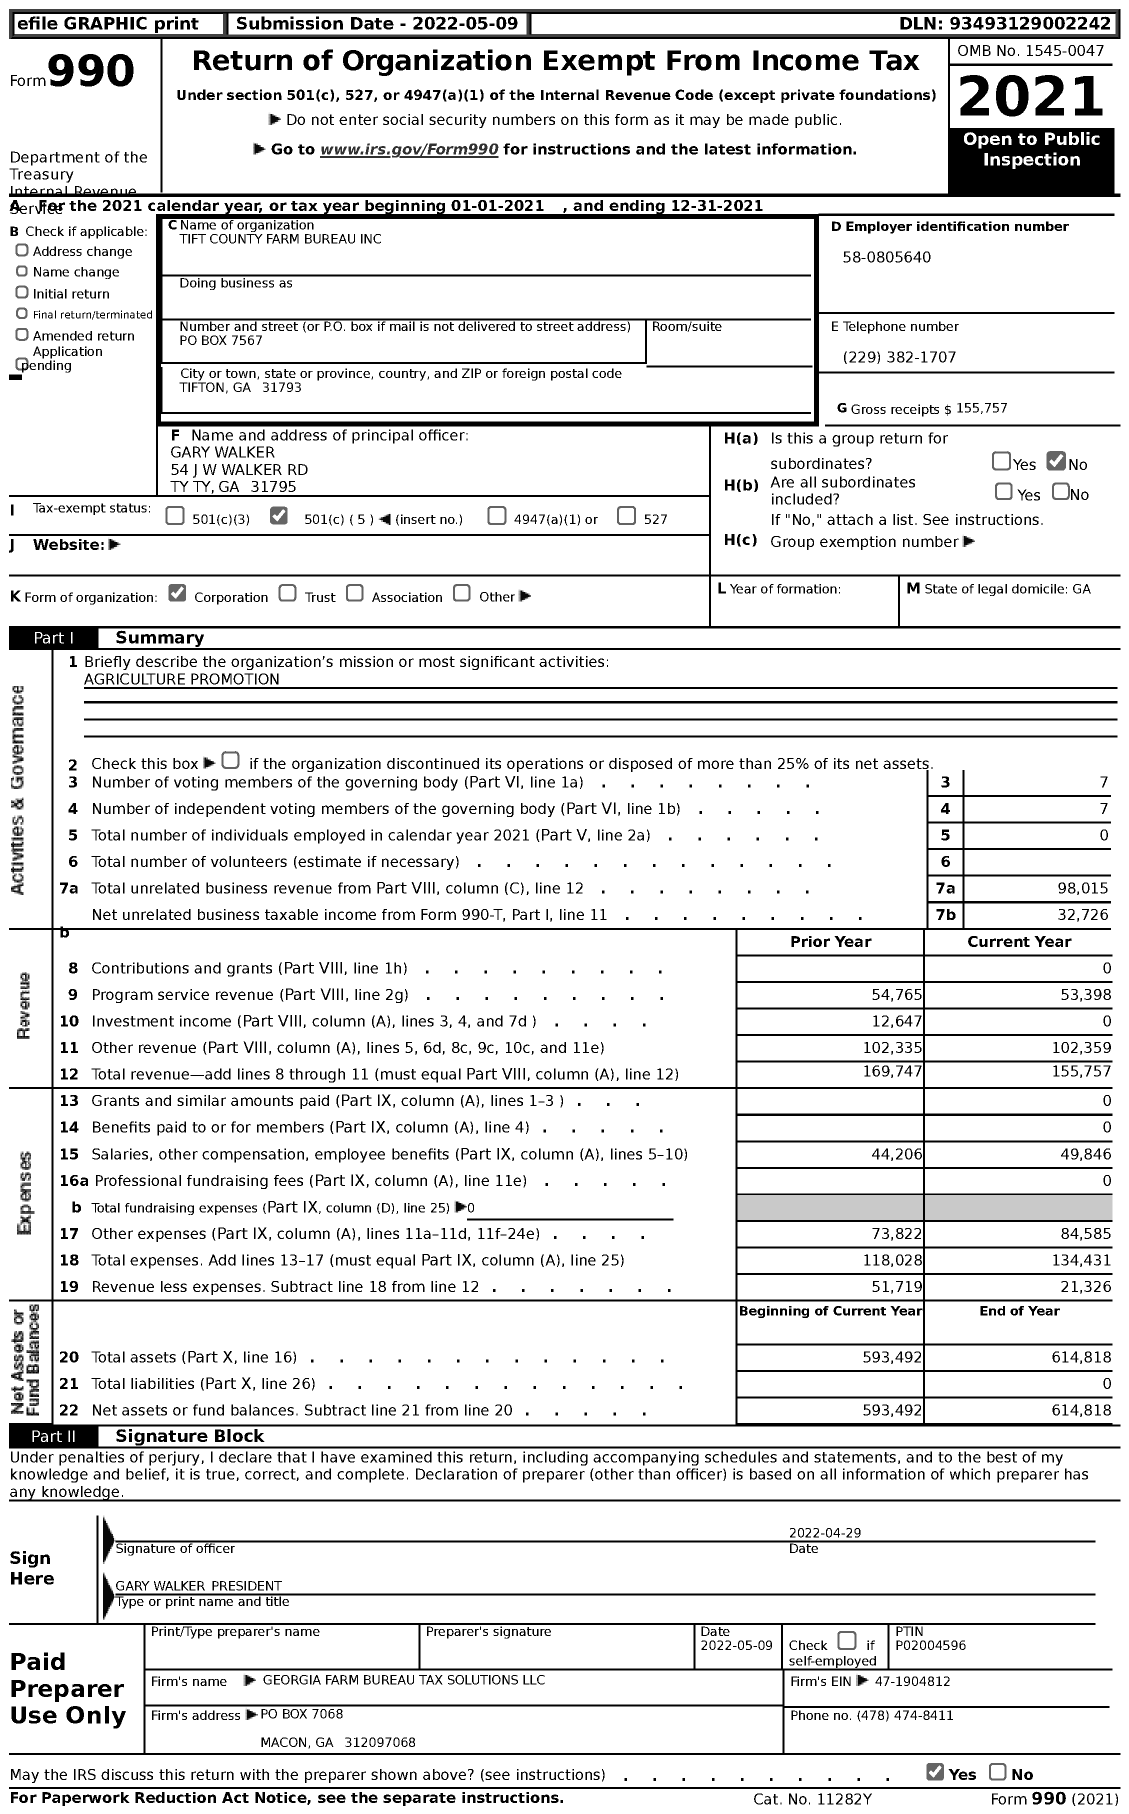 Image of first page of 2021 Form 990 for Georgia Farm Bureau Federation - Tift County Farm Bureau